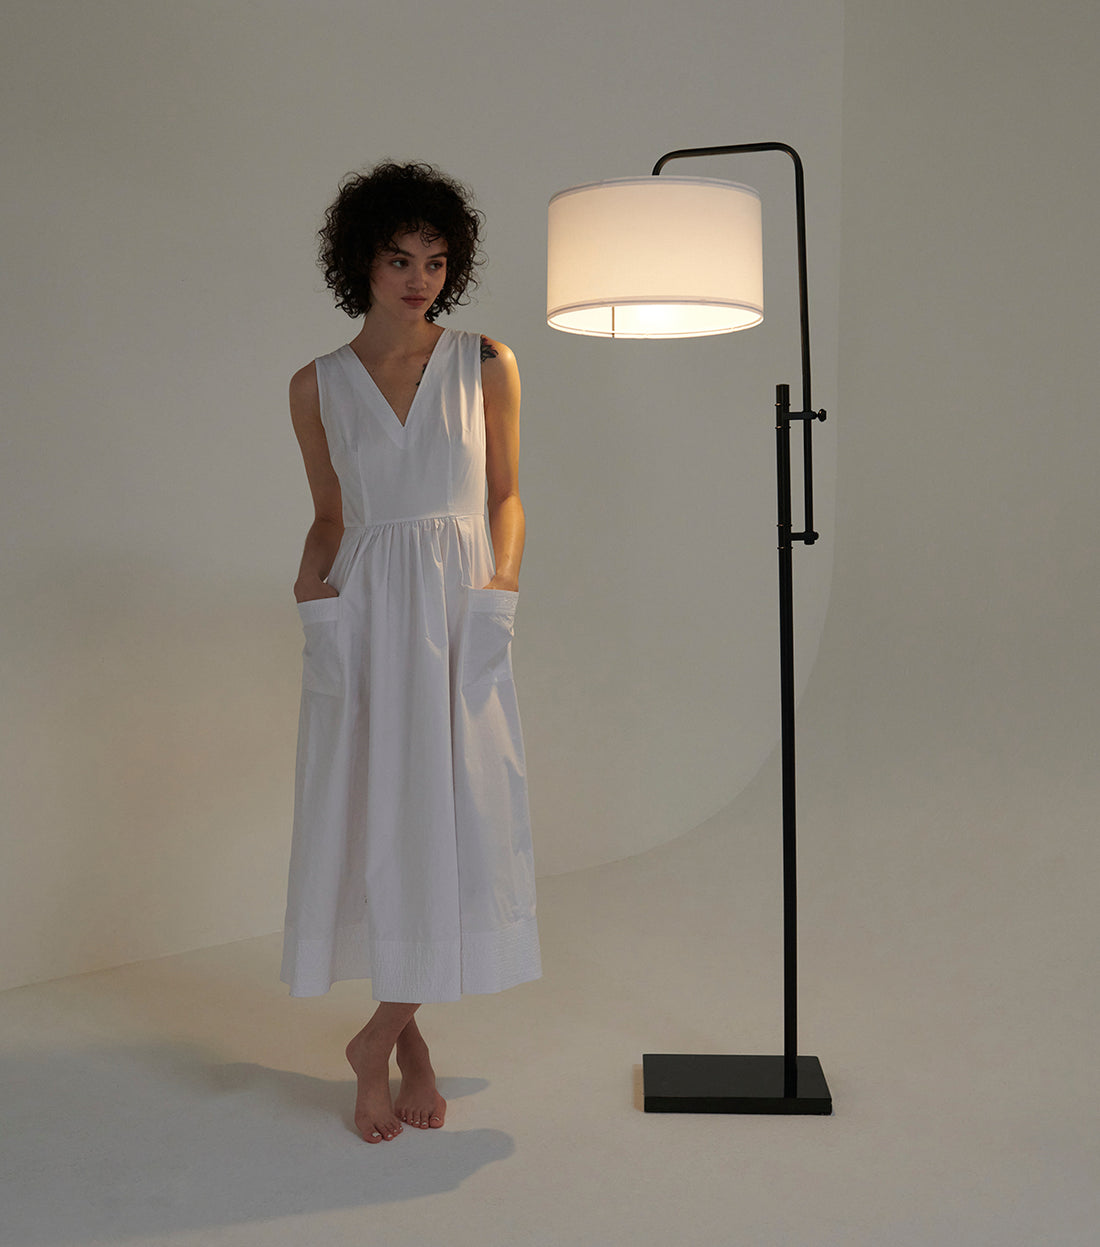 Brightech Leo - Led Floor Lamp for Living Room, Bedroom & Office - Standing Accent Lamp - Modern Tall Pole Light Overhangs for Reading